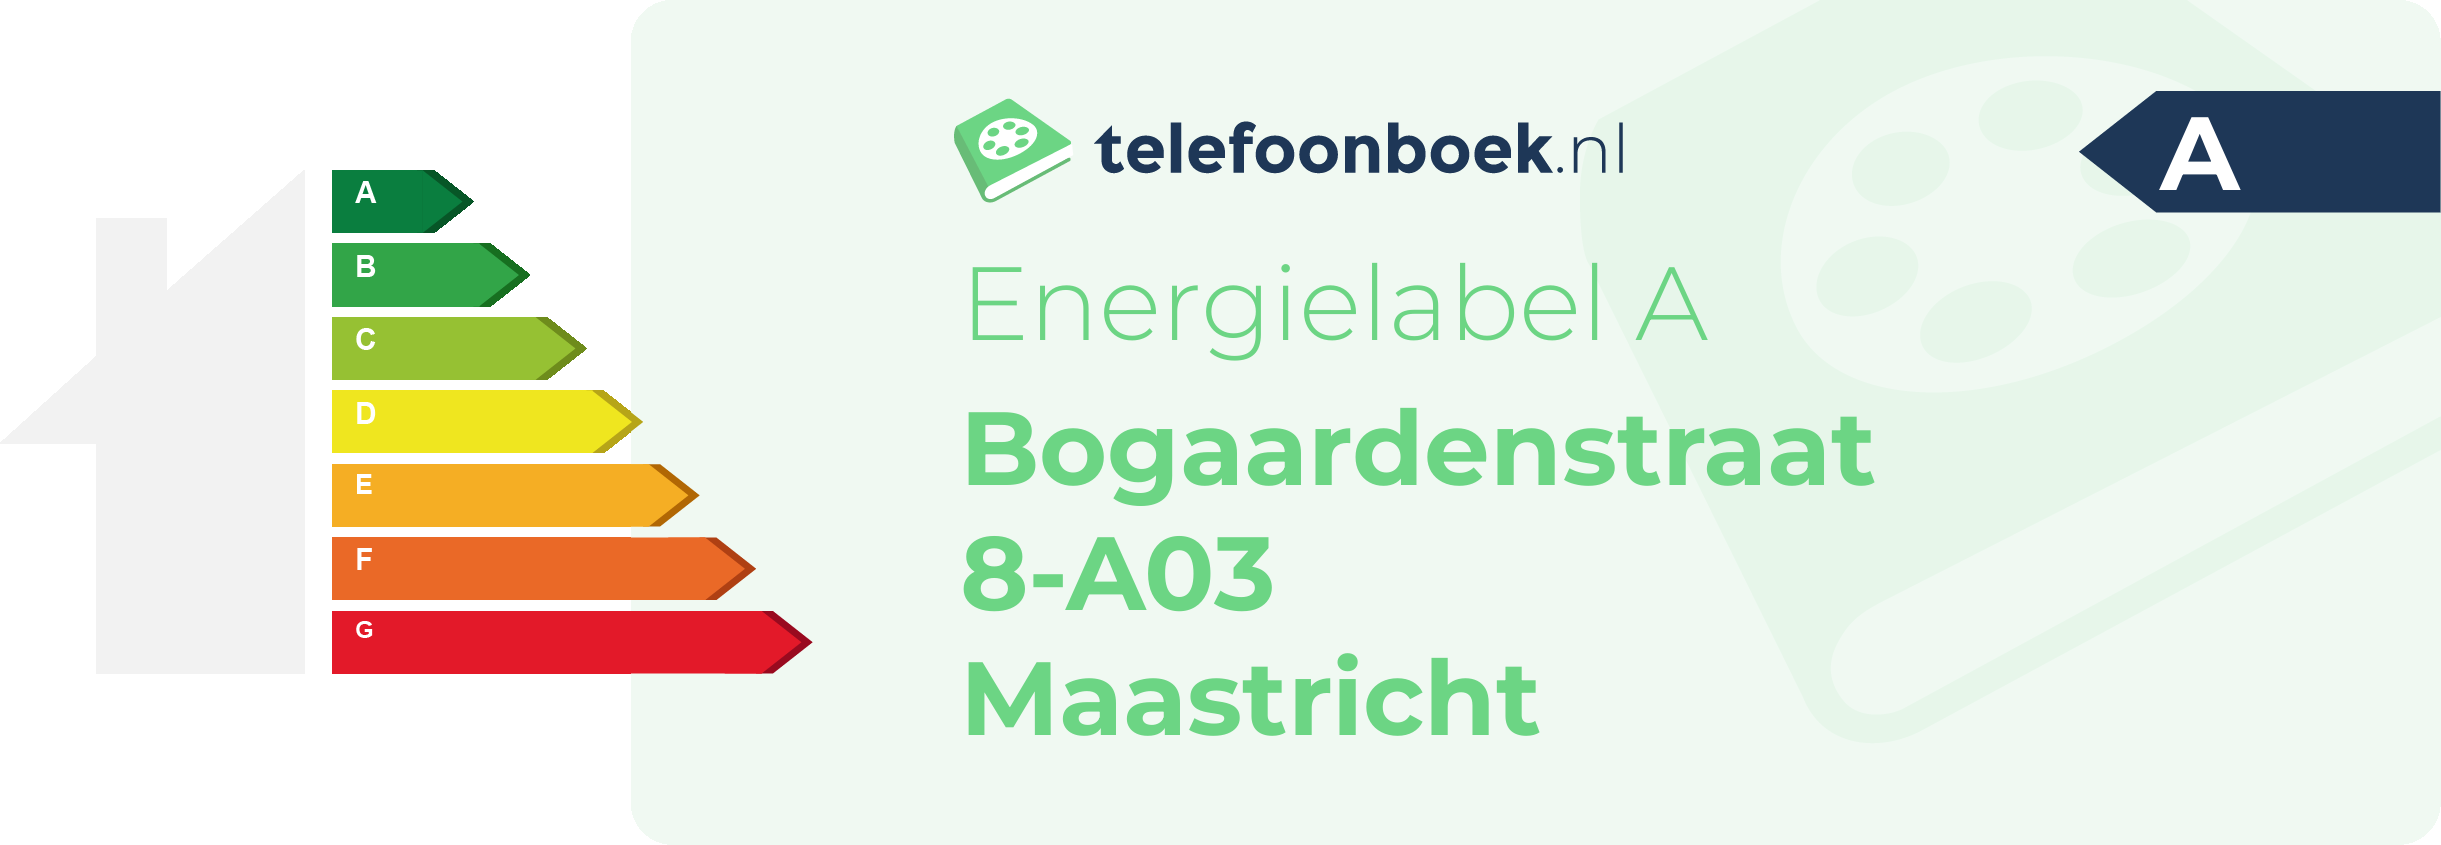 Energielabel Bogaardenstraat 8-A03 Maastricht